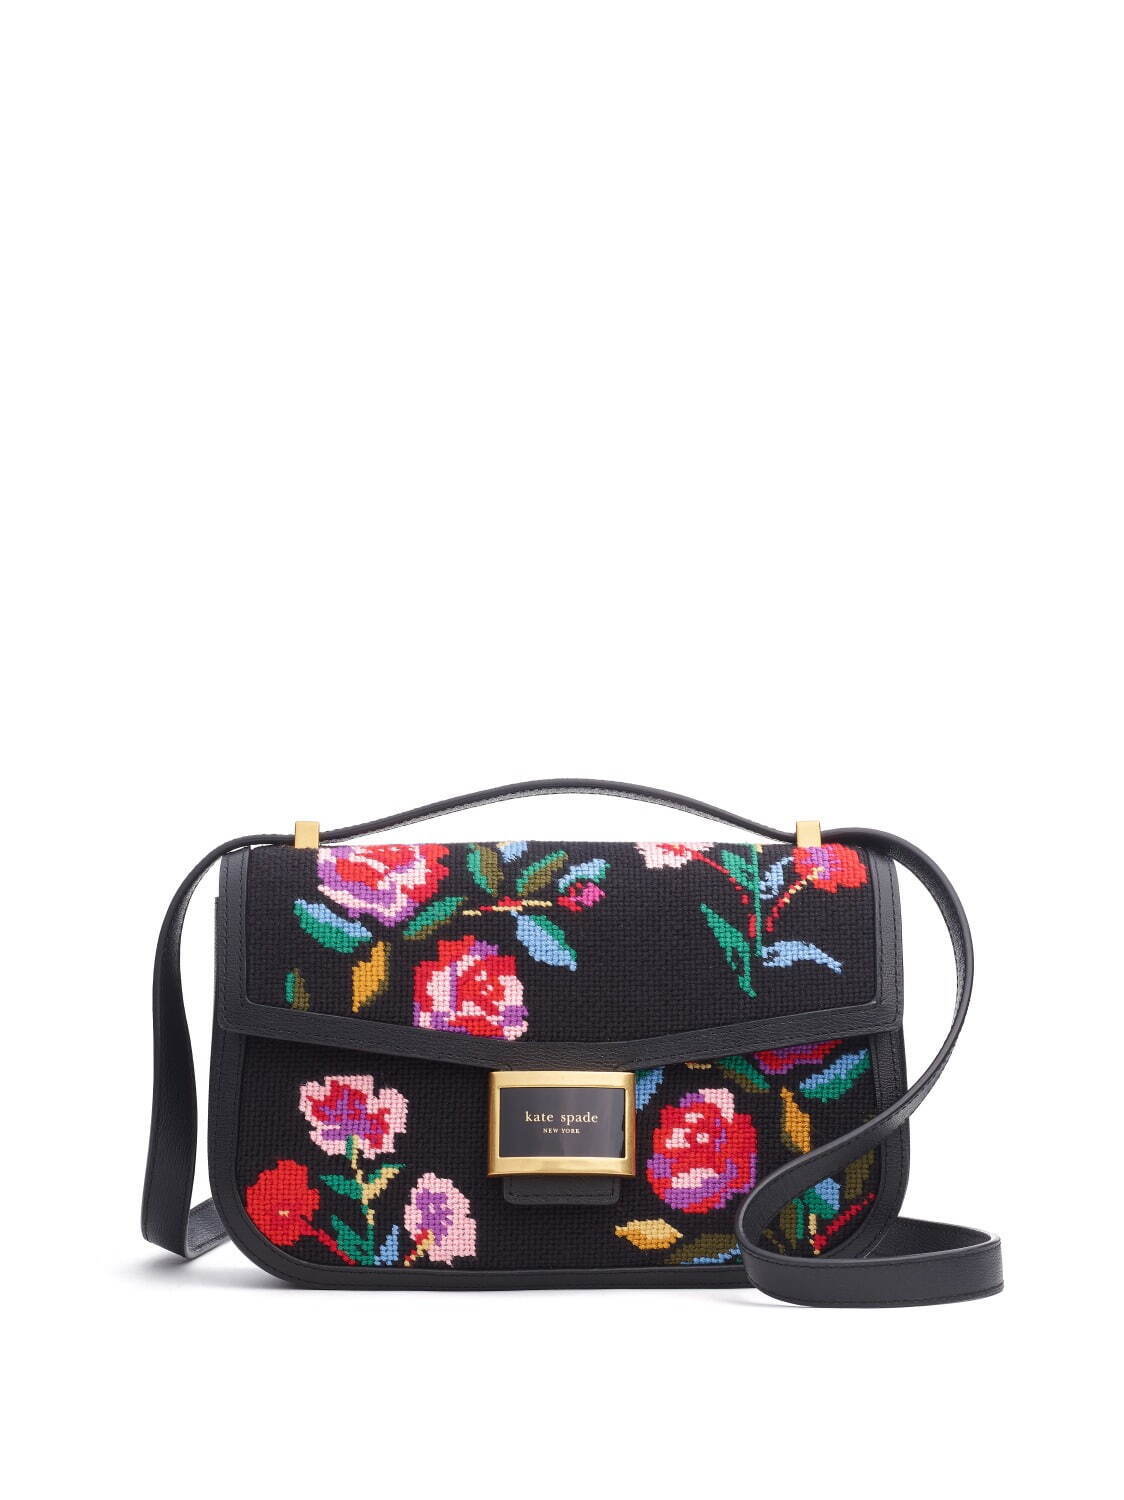 katy autumn floral needlepoint fabric medium convertible shoulder bag 69,300円
※8月末発売予定